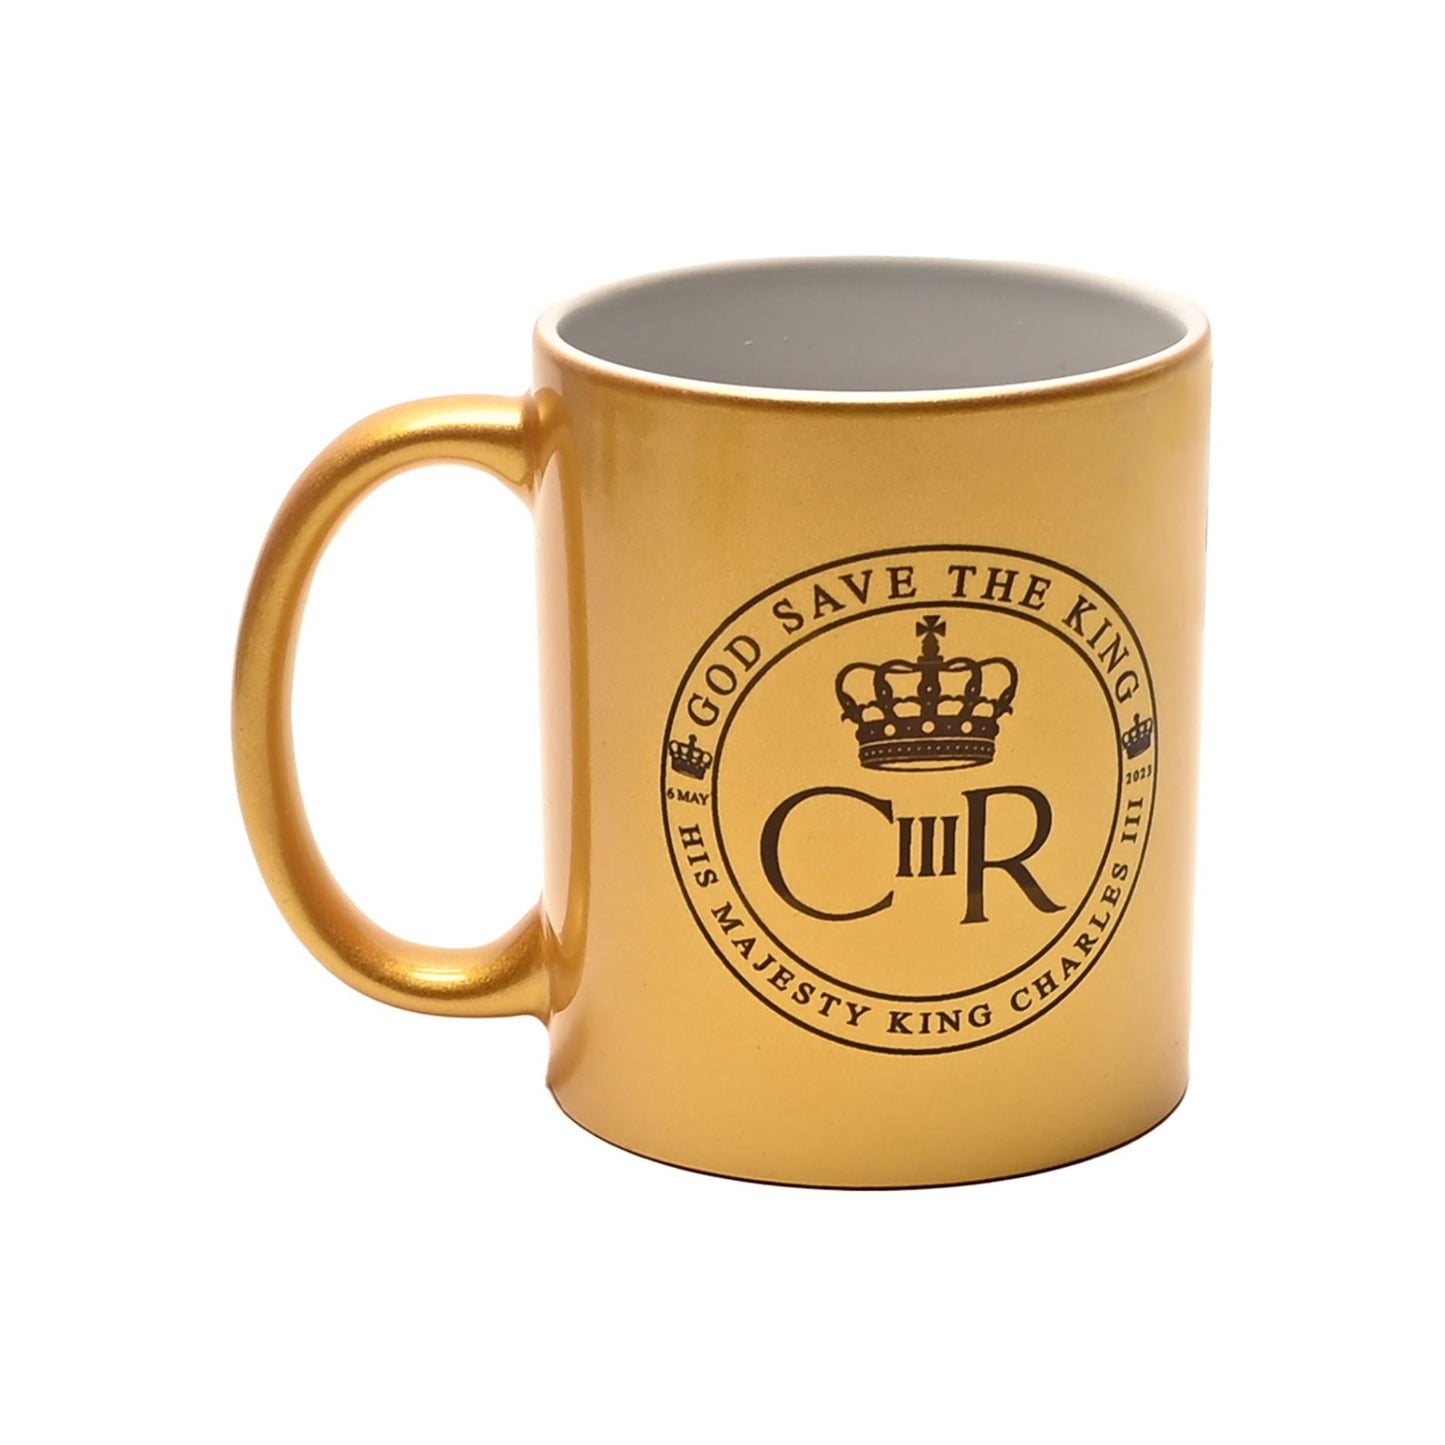 King Charles III Mug Made In UK - God Save The King